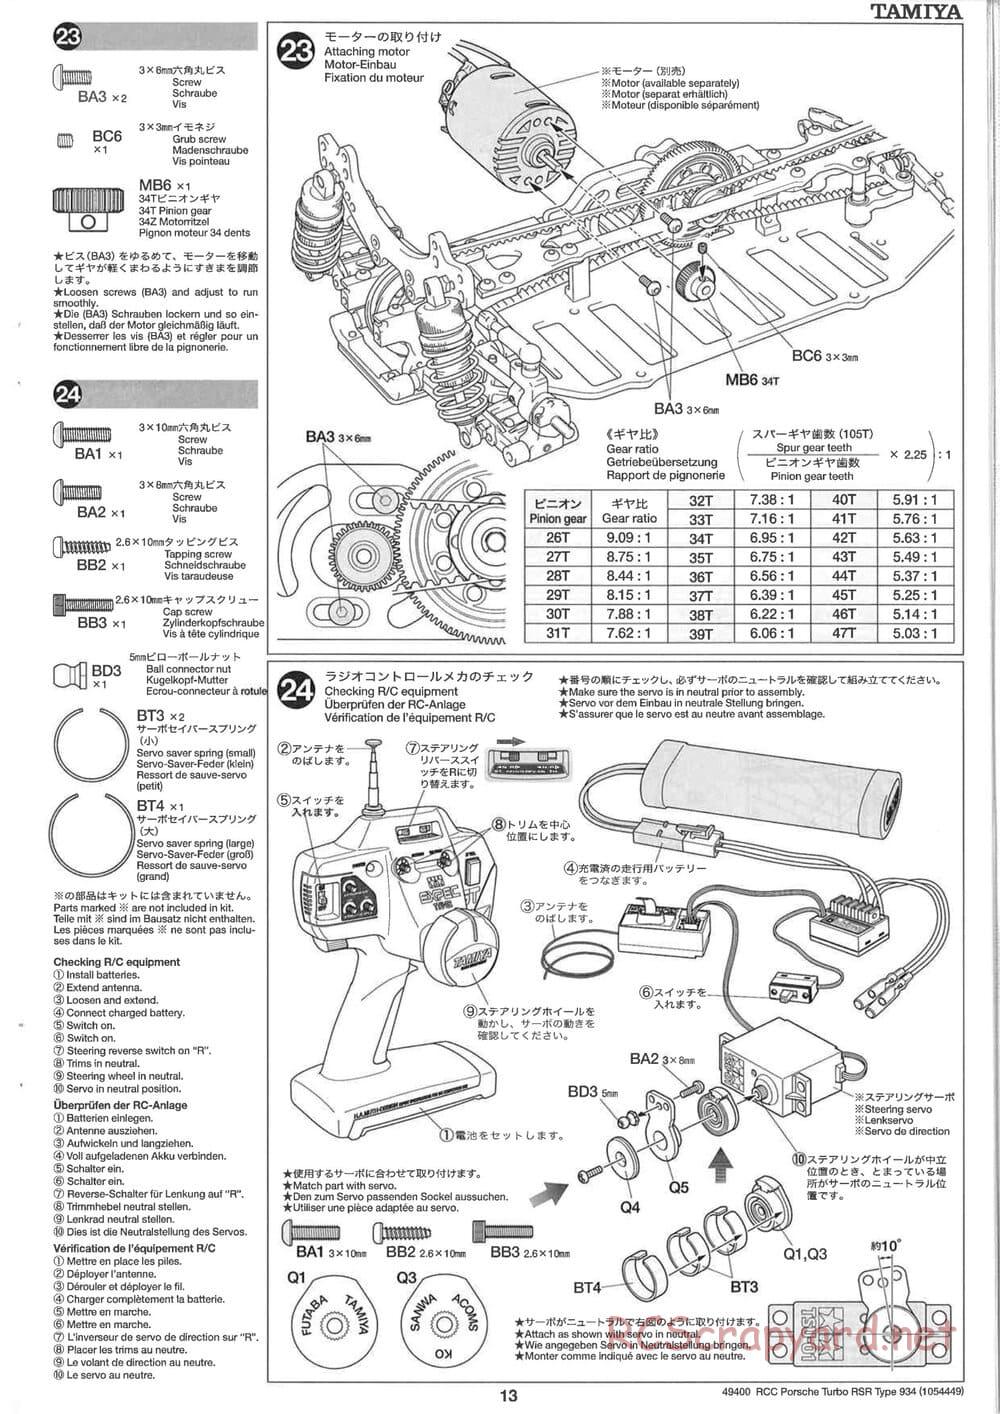 Tamiya - Porsche Turbo RSR Type 934 - TA05 Chassis - Manual - Page 13